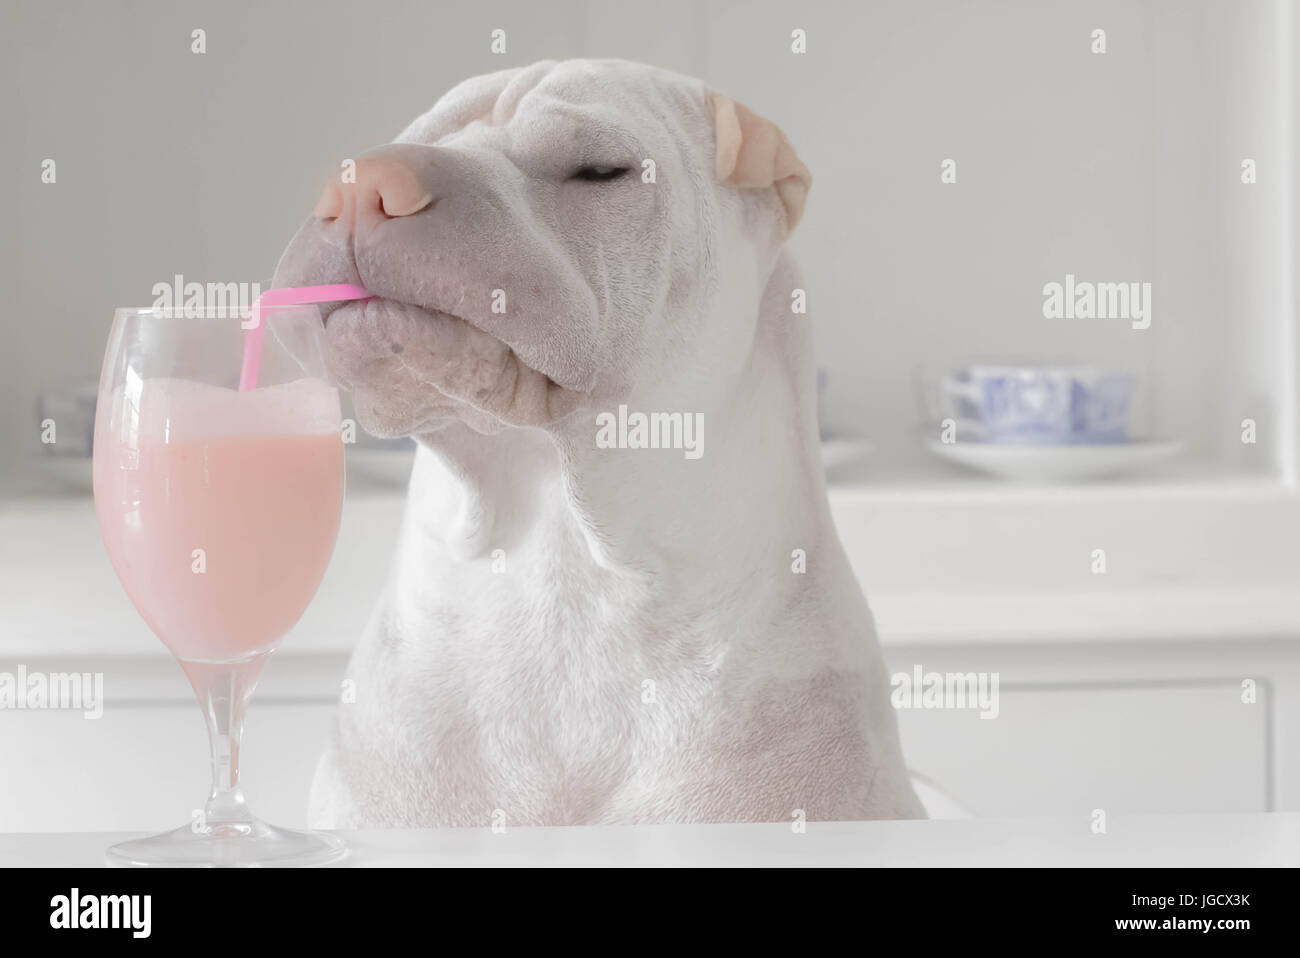 shar-pei dog drinking a milkshake through a straw Stock Photo